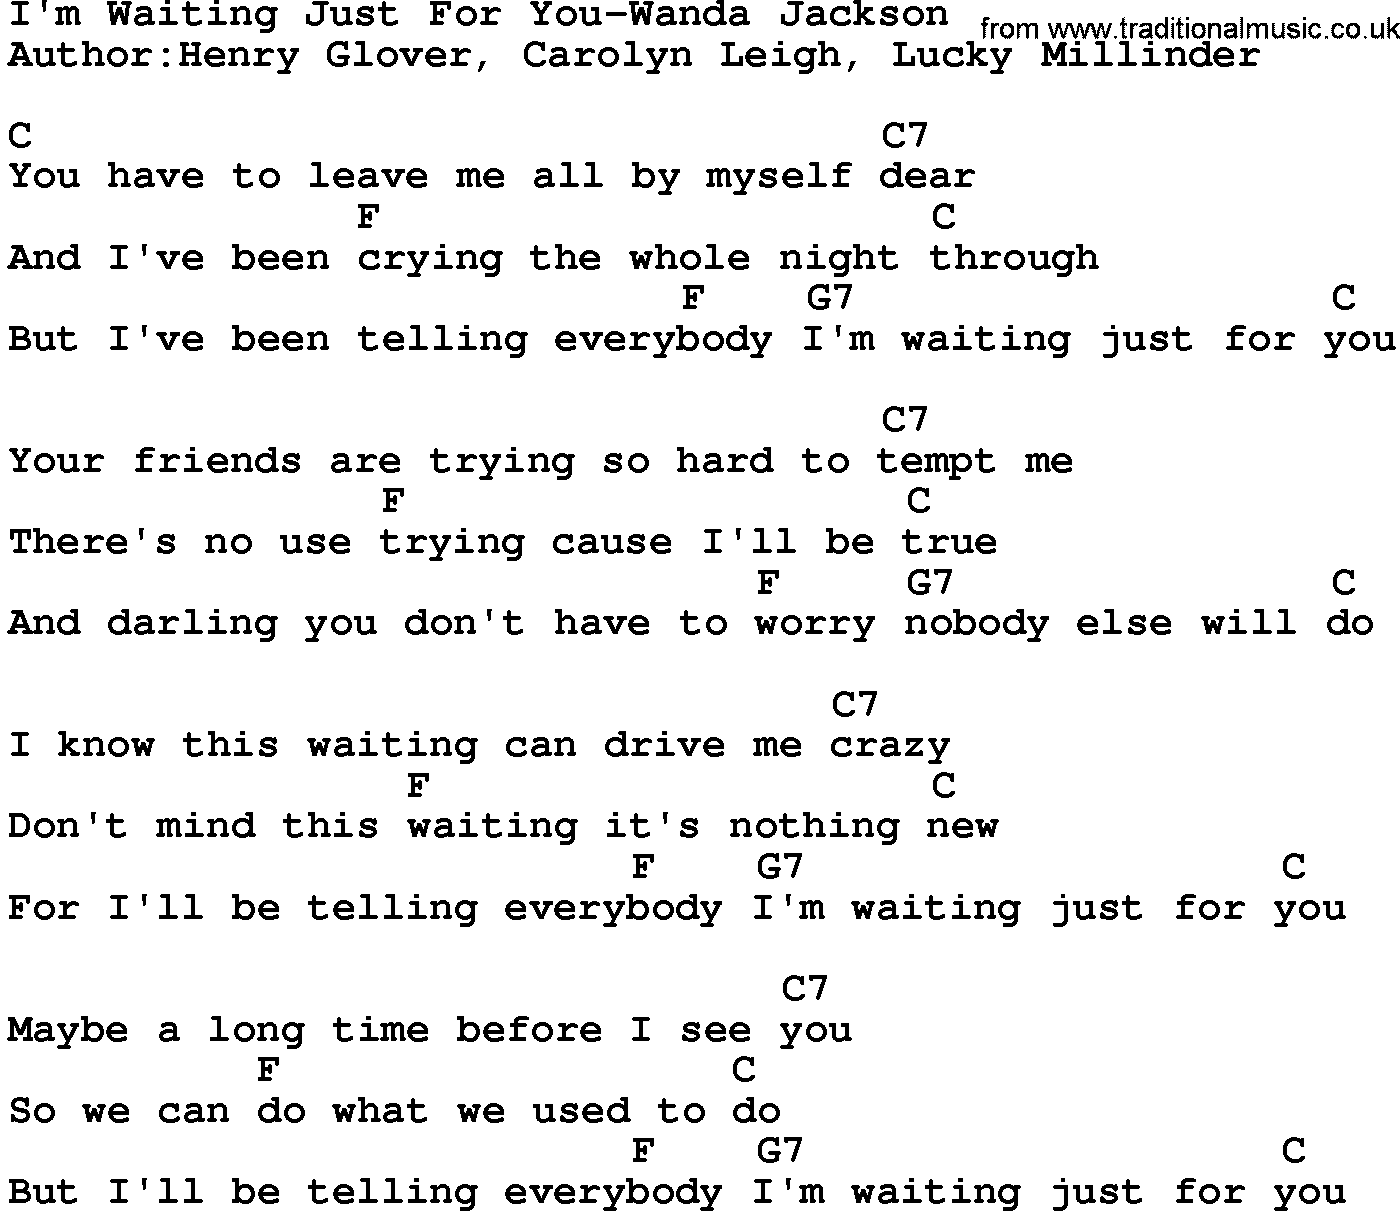 Country music song: I'm Waiting Just For You-Wanda Jackson lyrics and chords